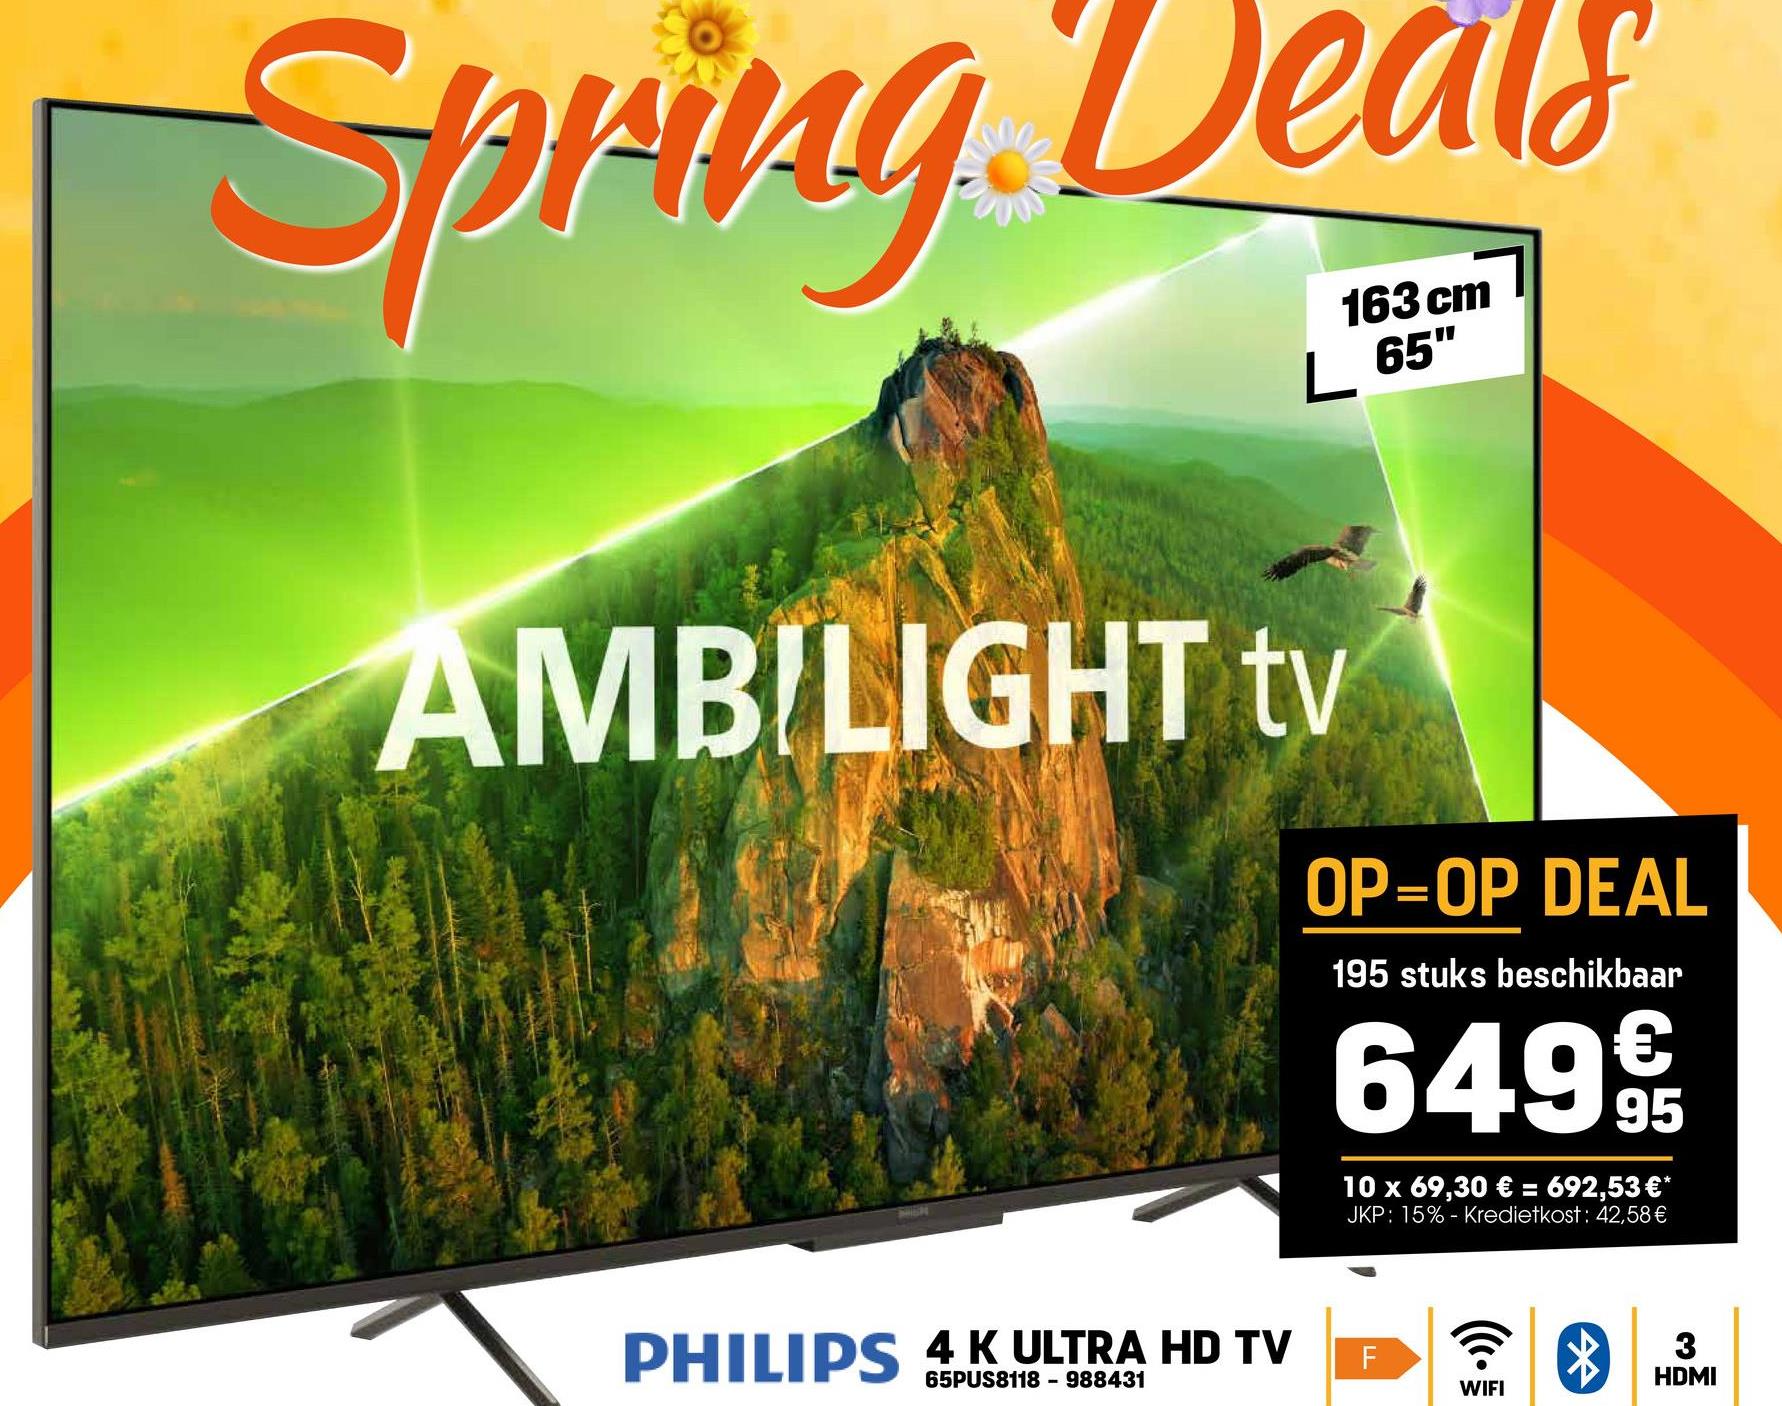 Spring Deals
163 cm
L 65"
AMBILIGHT tv
PHILIPS 4K ULTRA HD TV
65PUS8118 - 988431
OP=OP DEAL
195 stuks beschikbaar
649€
10 x 69,30 € = 692,53 €*
JKP: 15% - Kredietkost: 42,58 €
F
WIFI
3
HDMI